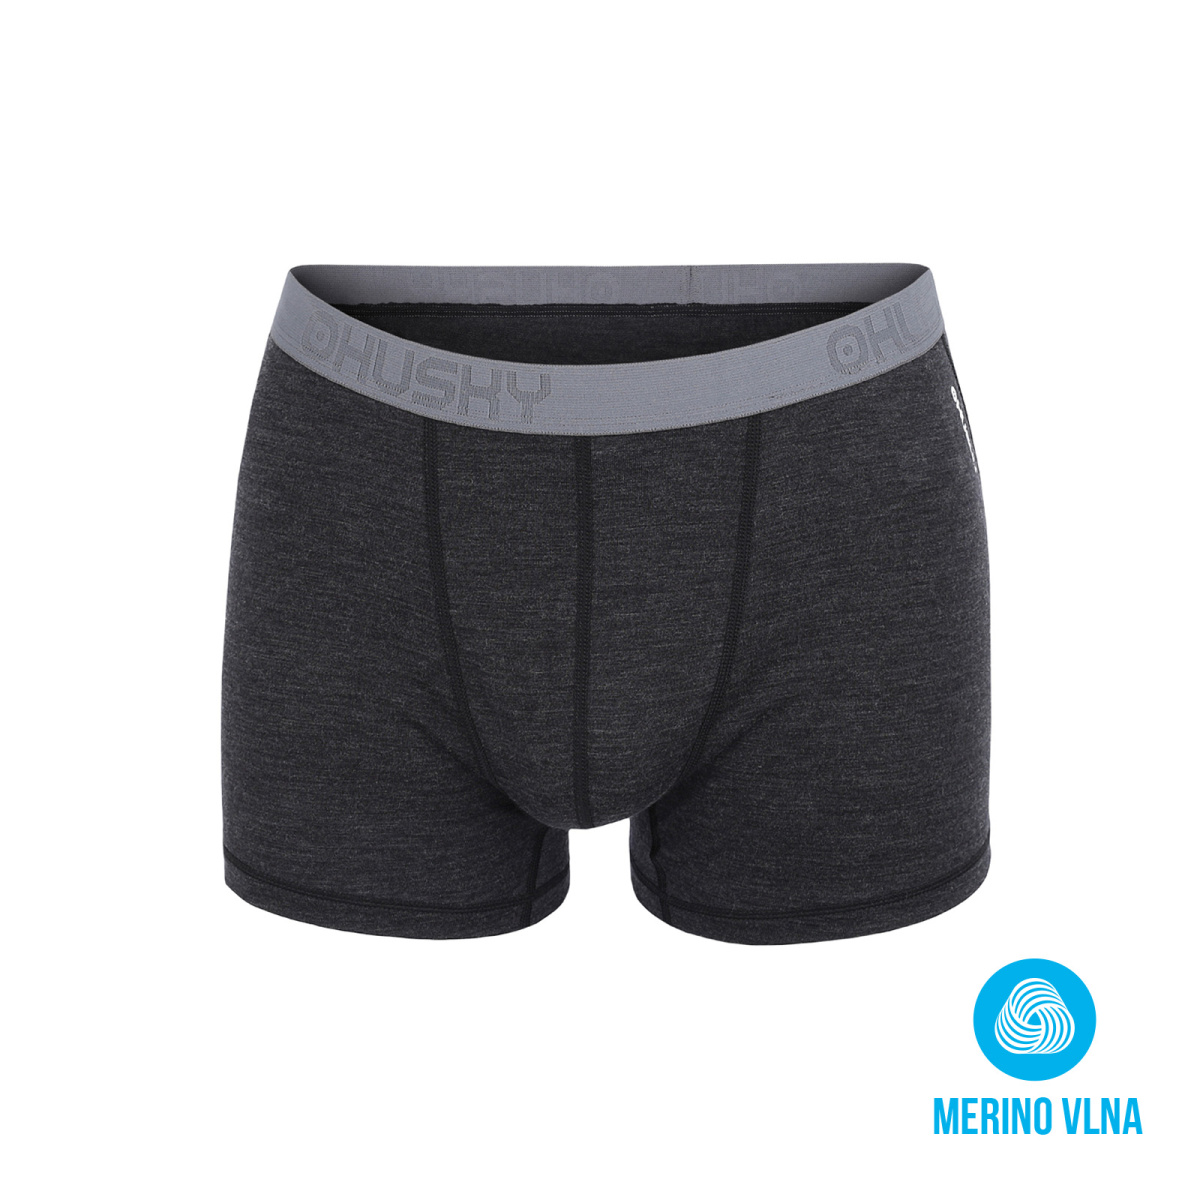 Merino thermal underwear - Men's boxers – black